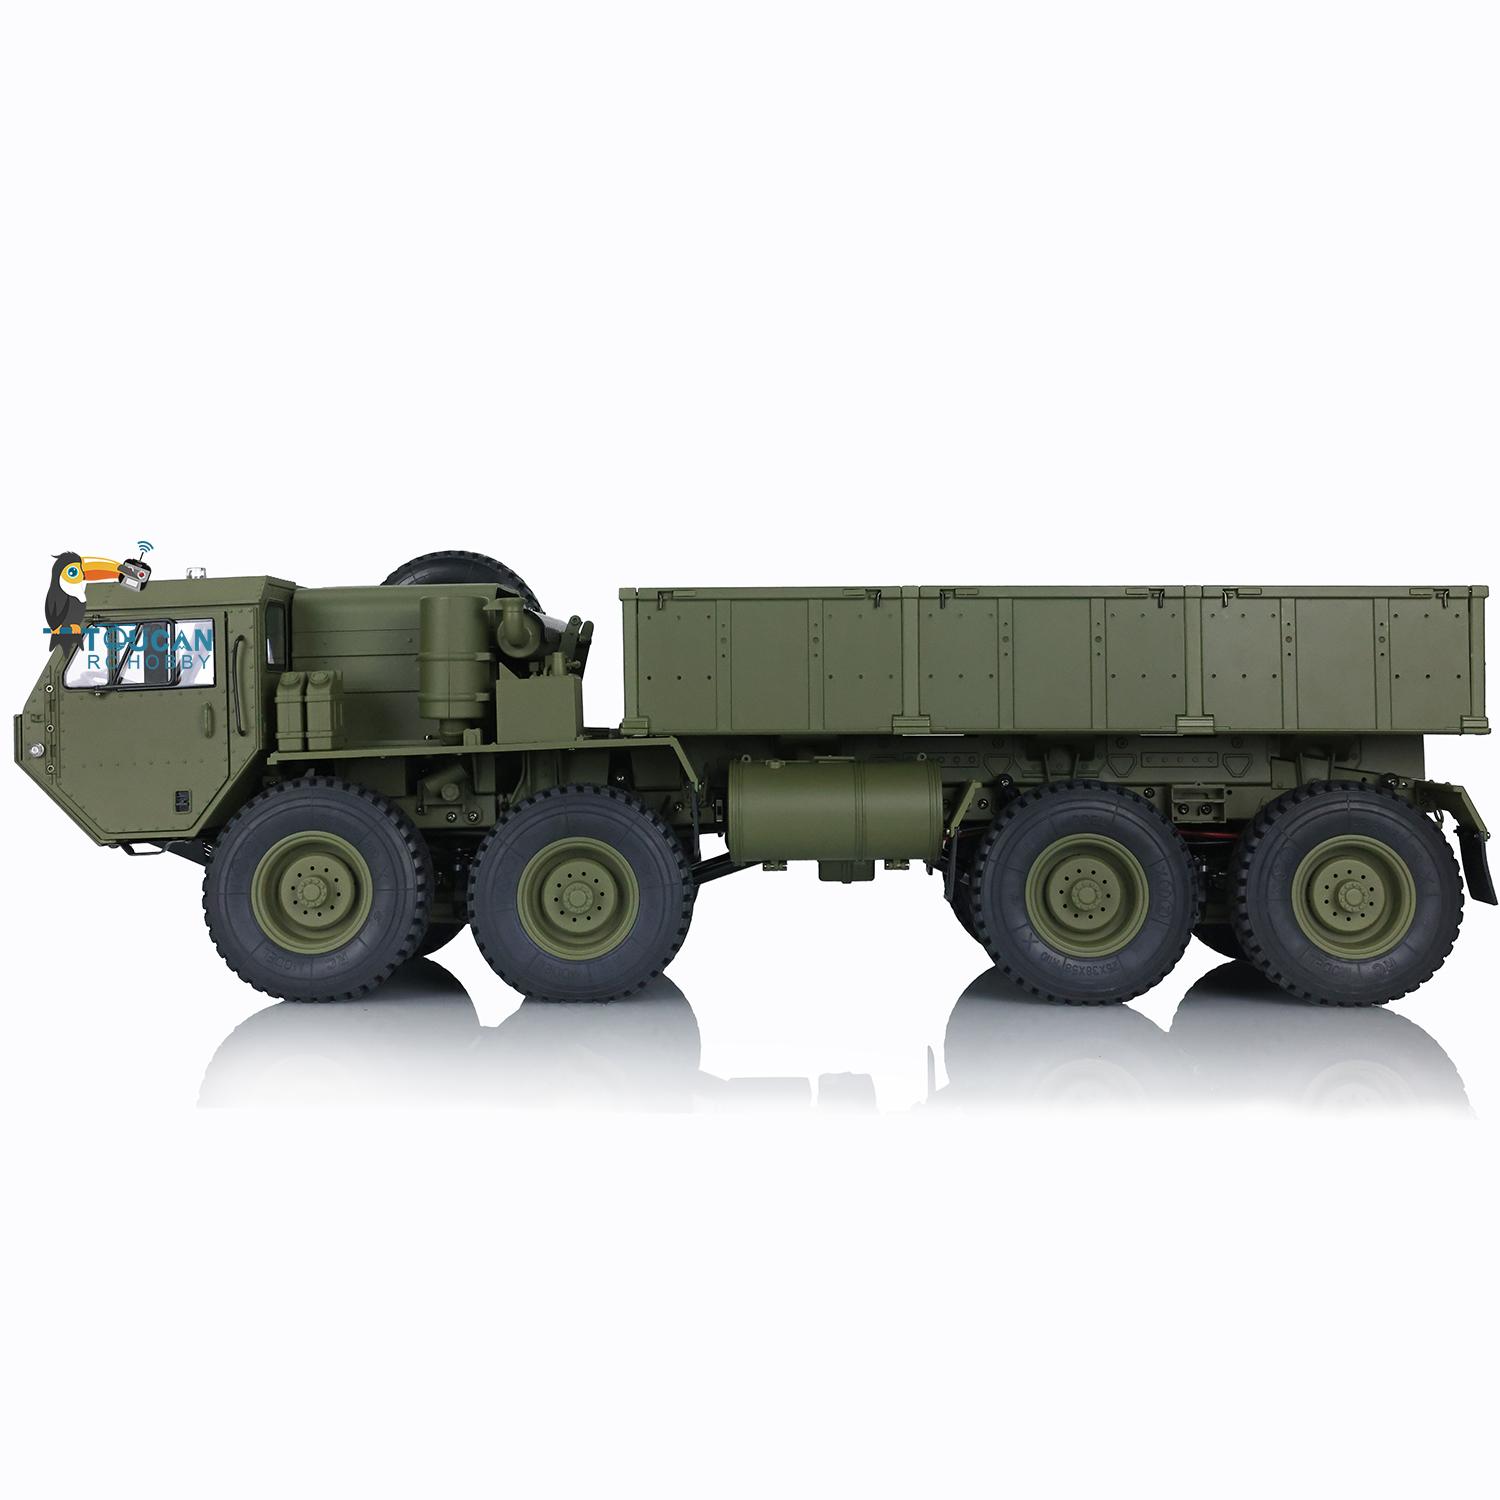 Metal Chassis 1/12 8*8 US Military RC Truck Model ESC Servo Motor P801 Radio